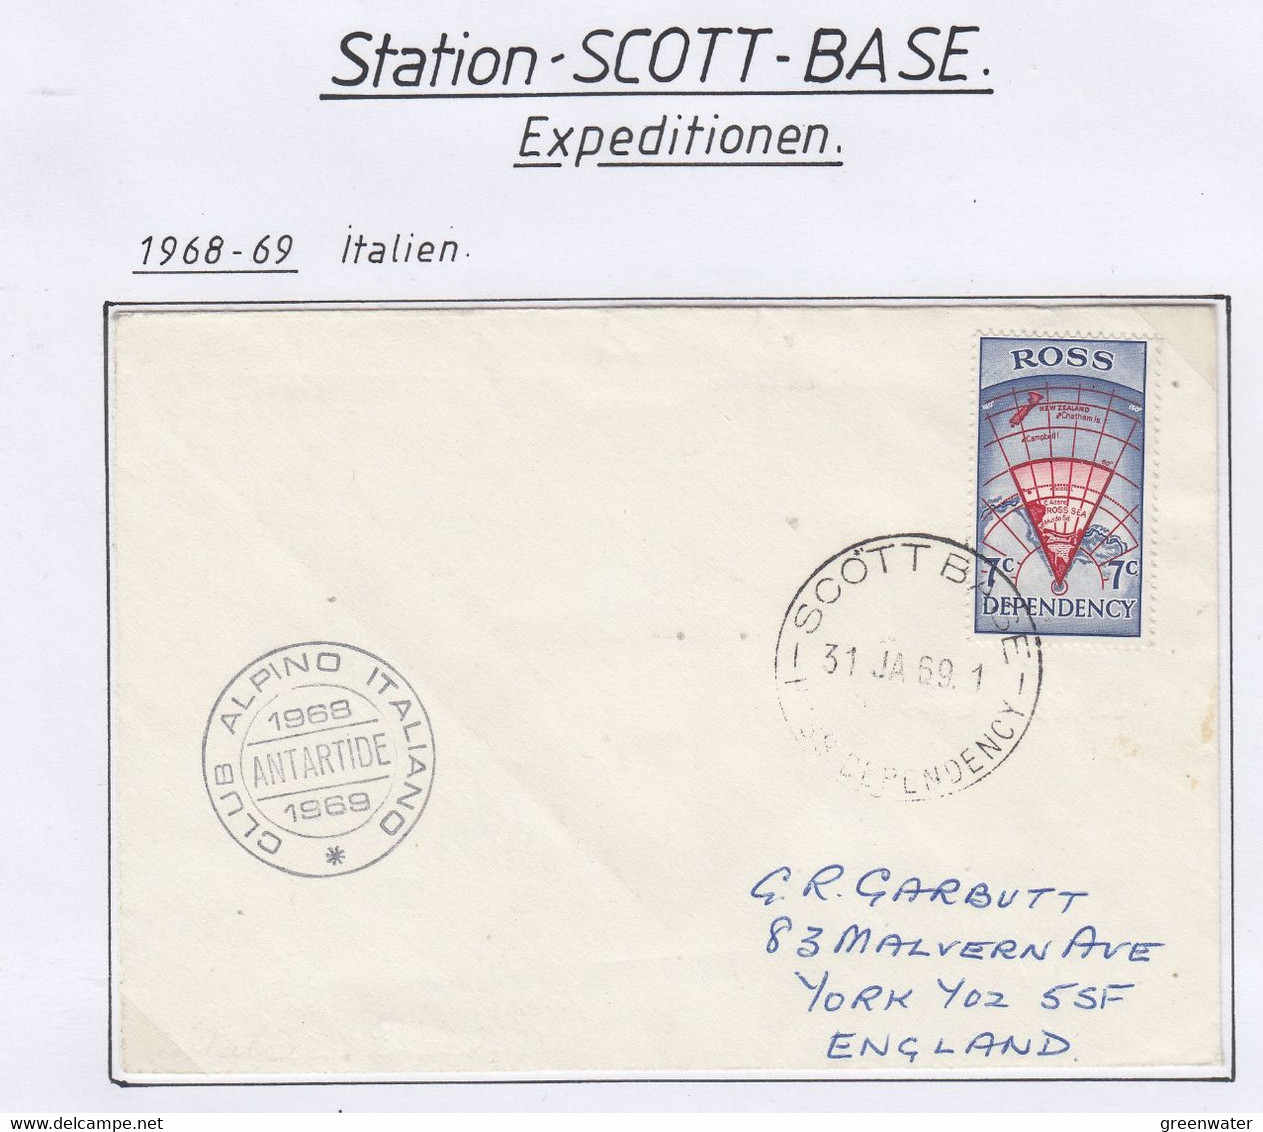 Ross Dependency 1969 Cover Scott Base Ca Club Alpina Italiano Ca 31 JA 69 (SC144) - Briefe U. Dokumente